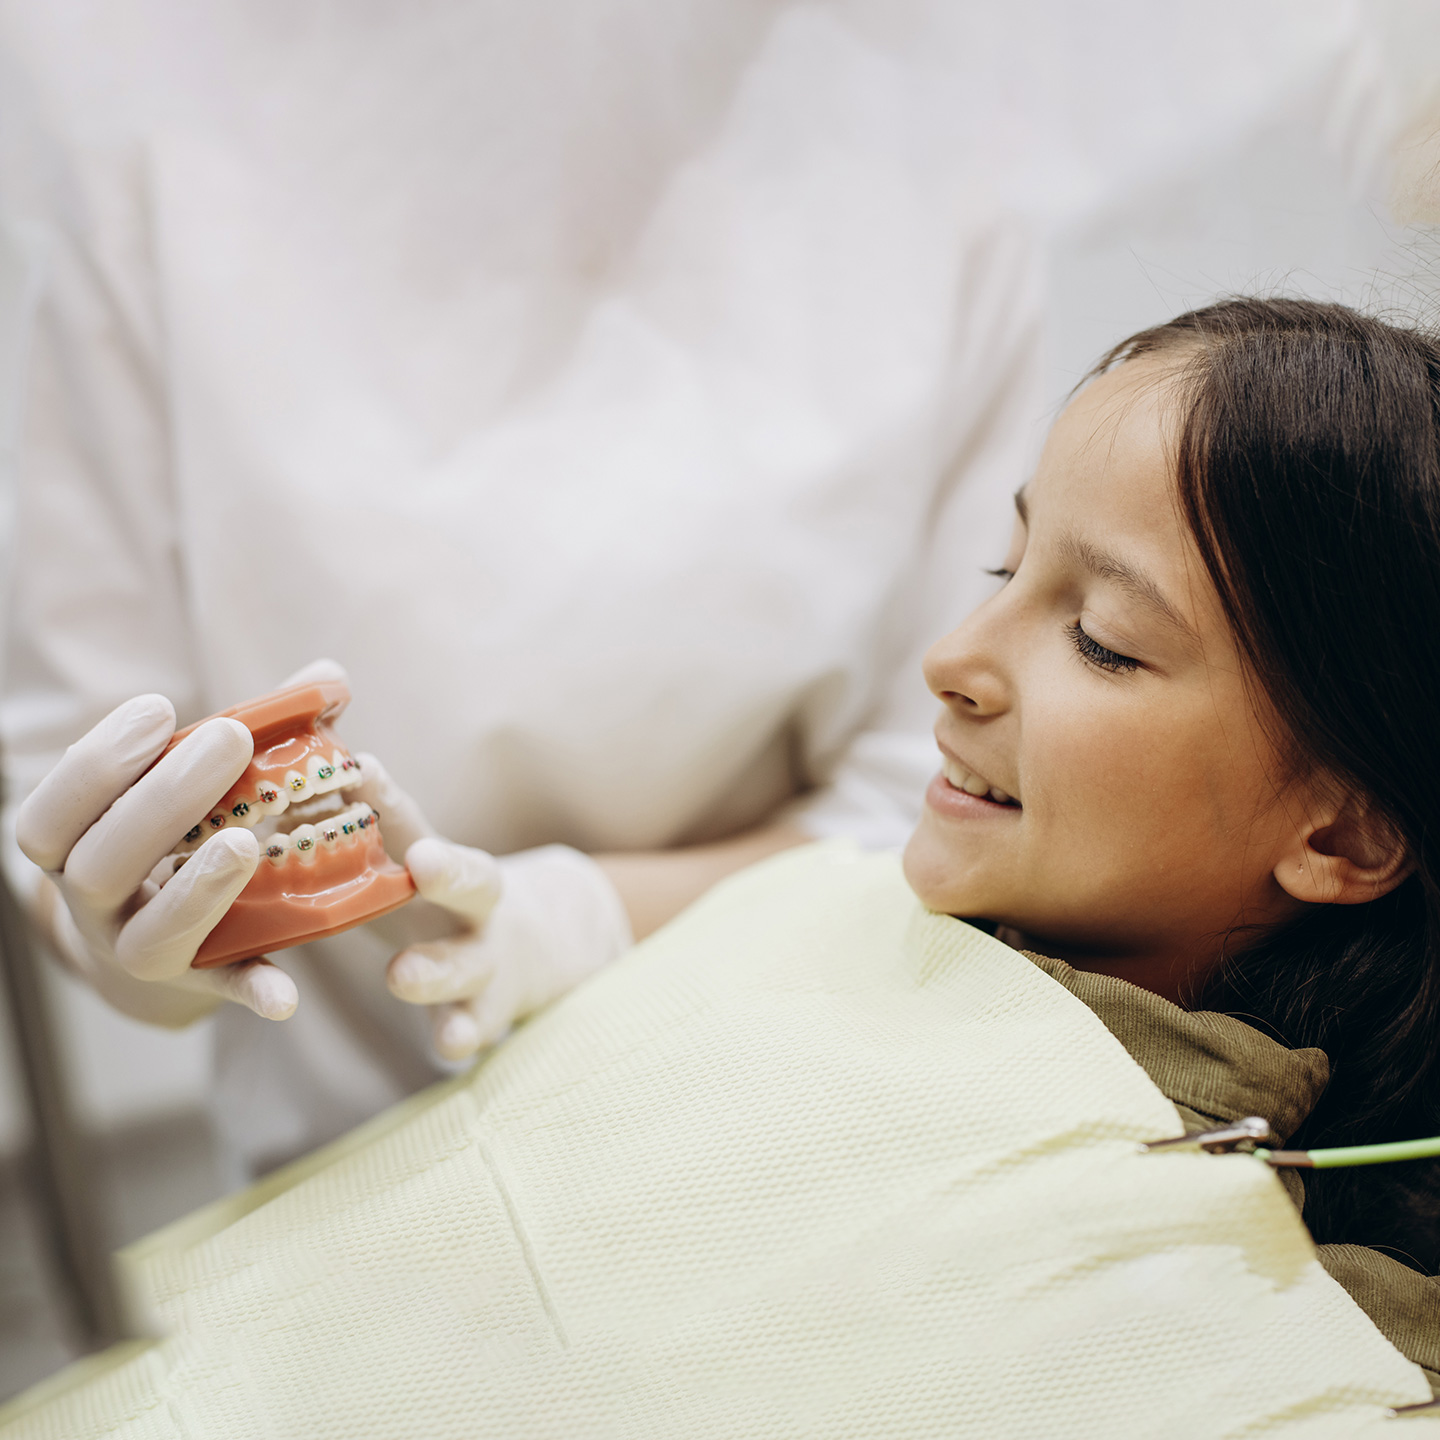 children orthodontics